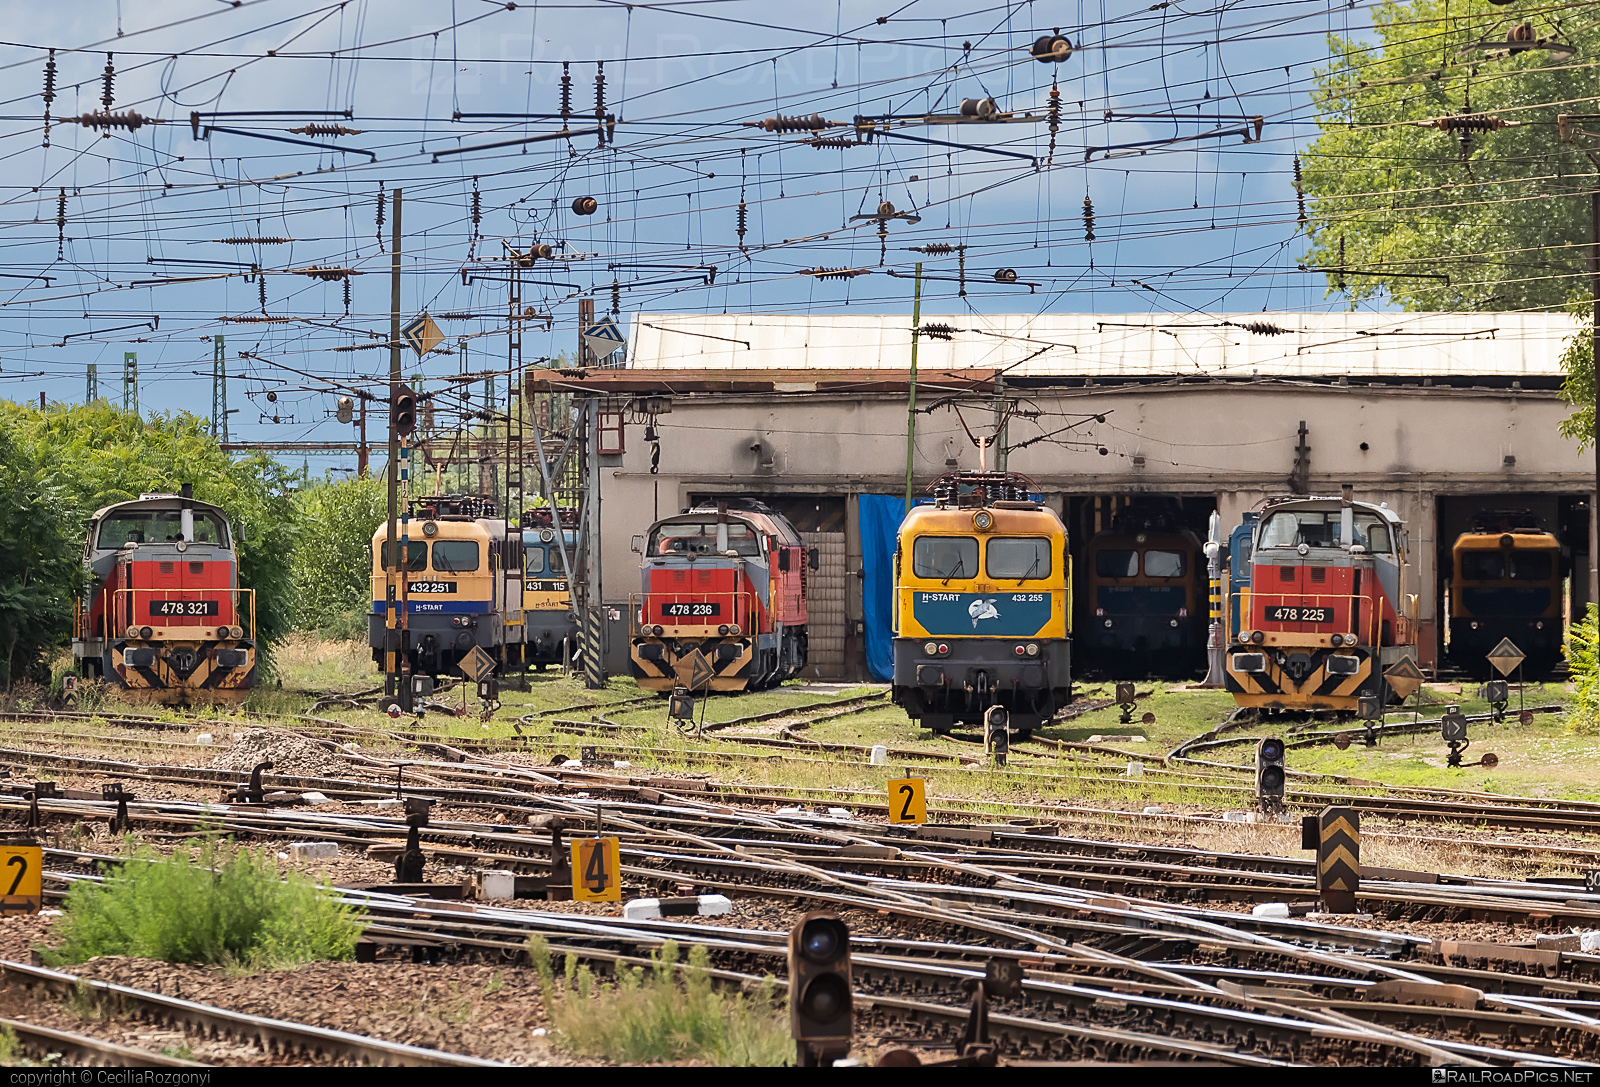 Ganz-MÁVAG VM14-19 - 432 255 operated by MÁV-START ZRt. #ganz43 #ganz432 #ganzmavag #ganzmavag43 #ganzmavag432 #ganzmavagvm1419 #locomotive432 #mav #mavstart #mavstartzrt #v43locomotive